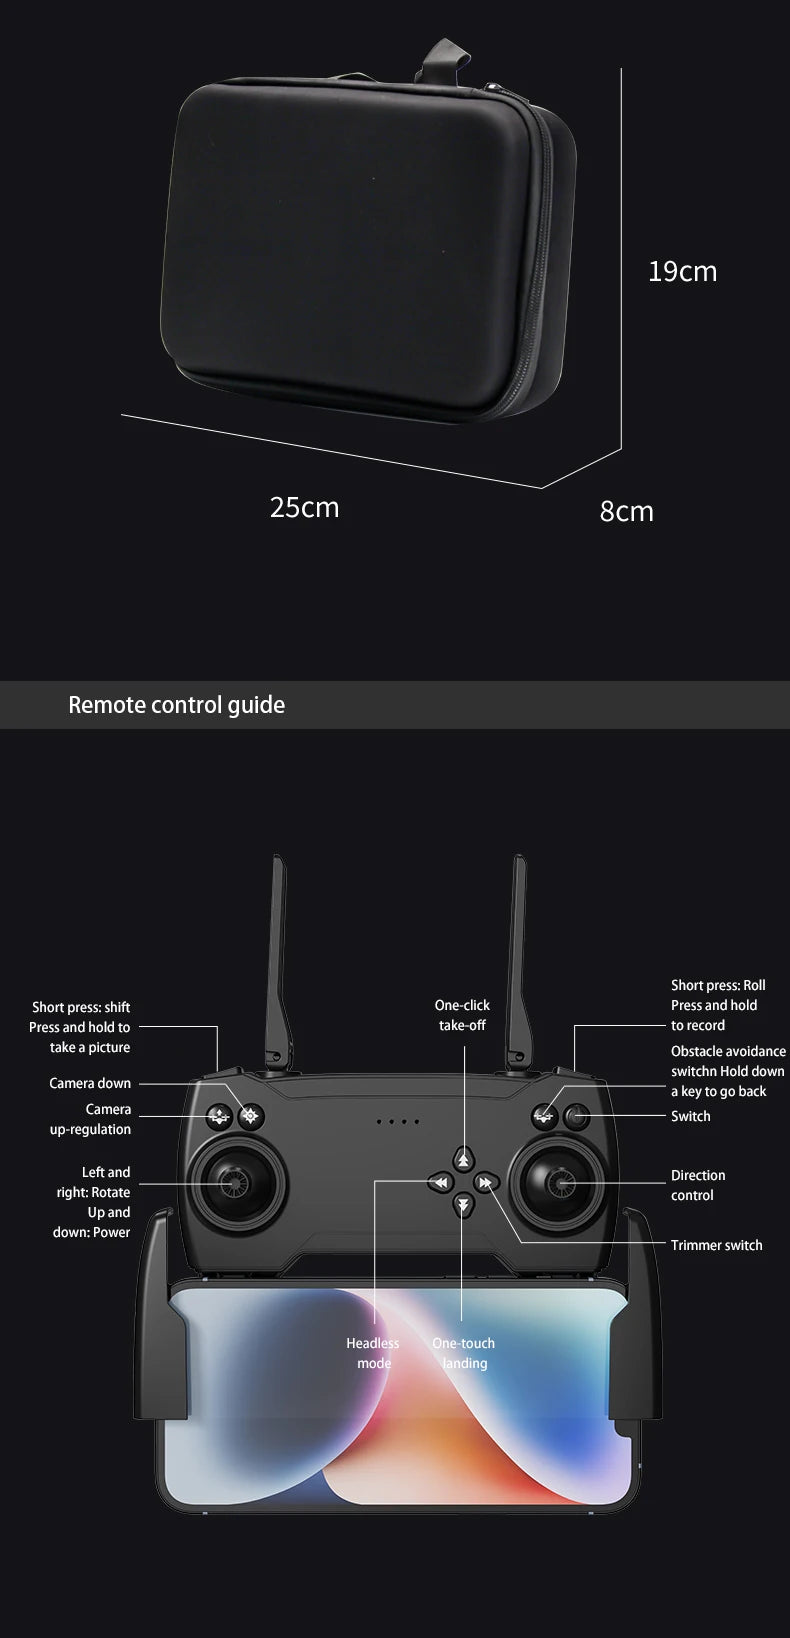 P18 Drone, Remote control guide 19cm 25cm 8cm akey to go back Camera